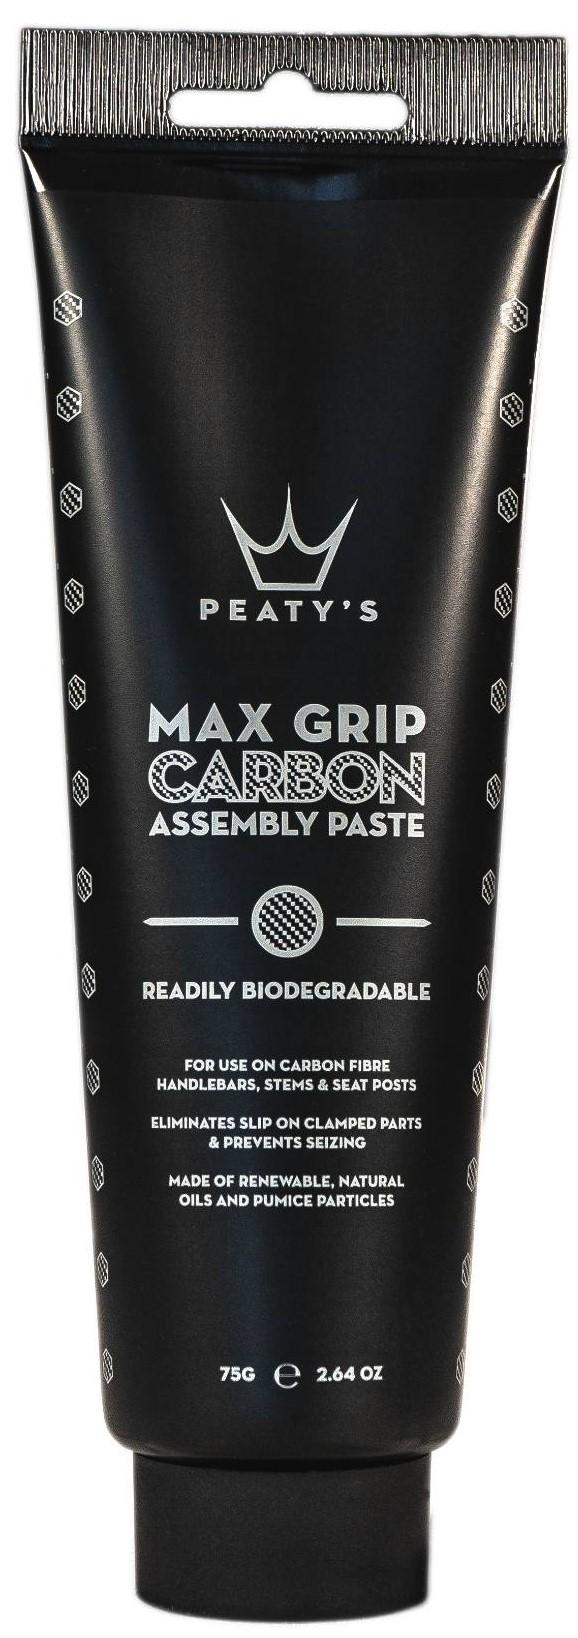 Peatys Max Grip Carbon Assembly Paste  Black